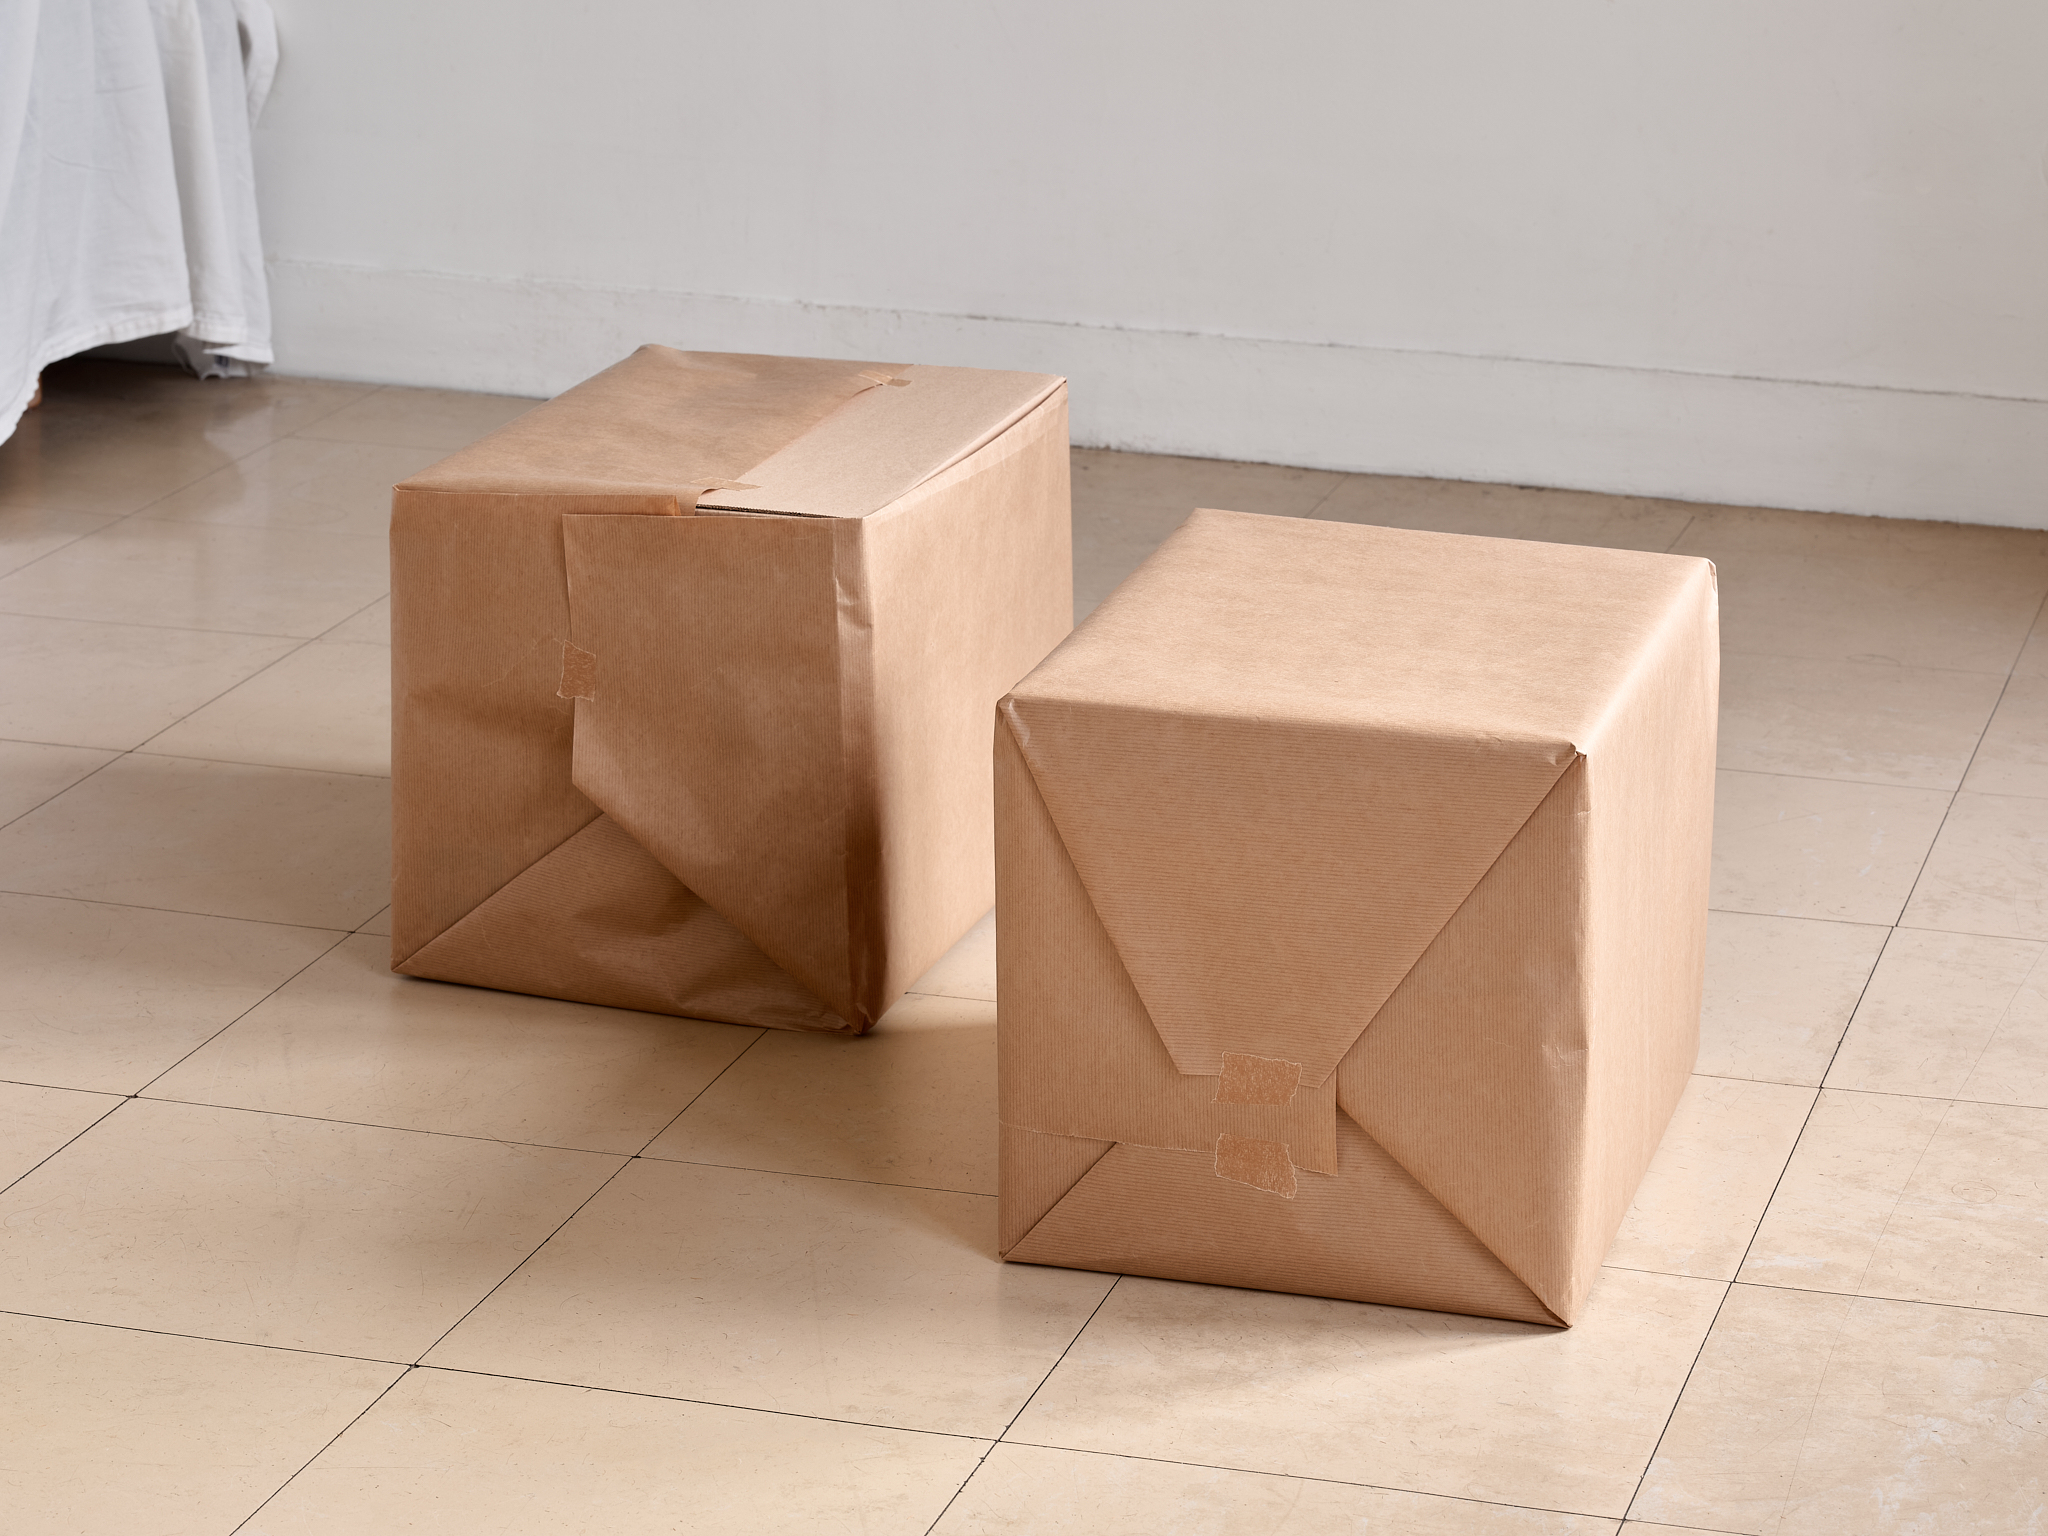 Francesca Brugola, cardboard boxes, paper, cello tape exhibition view